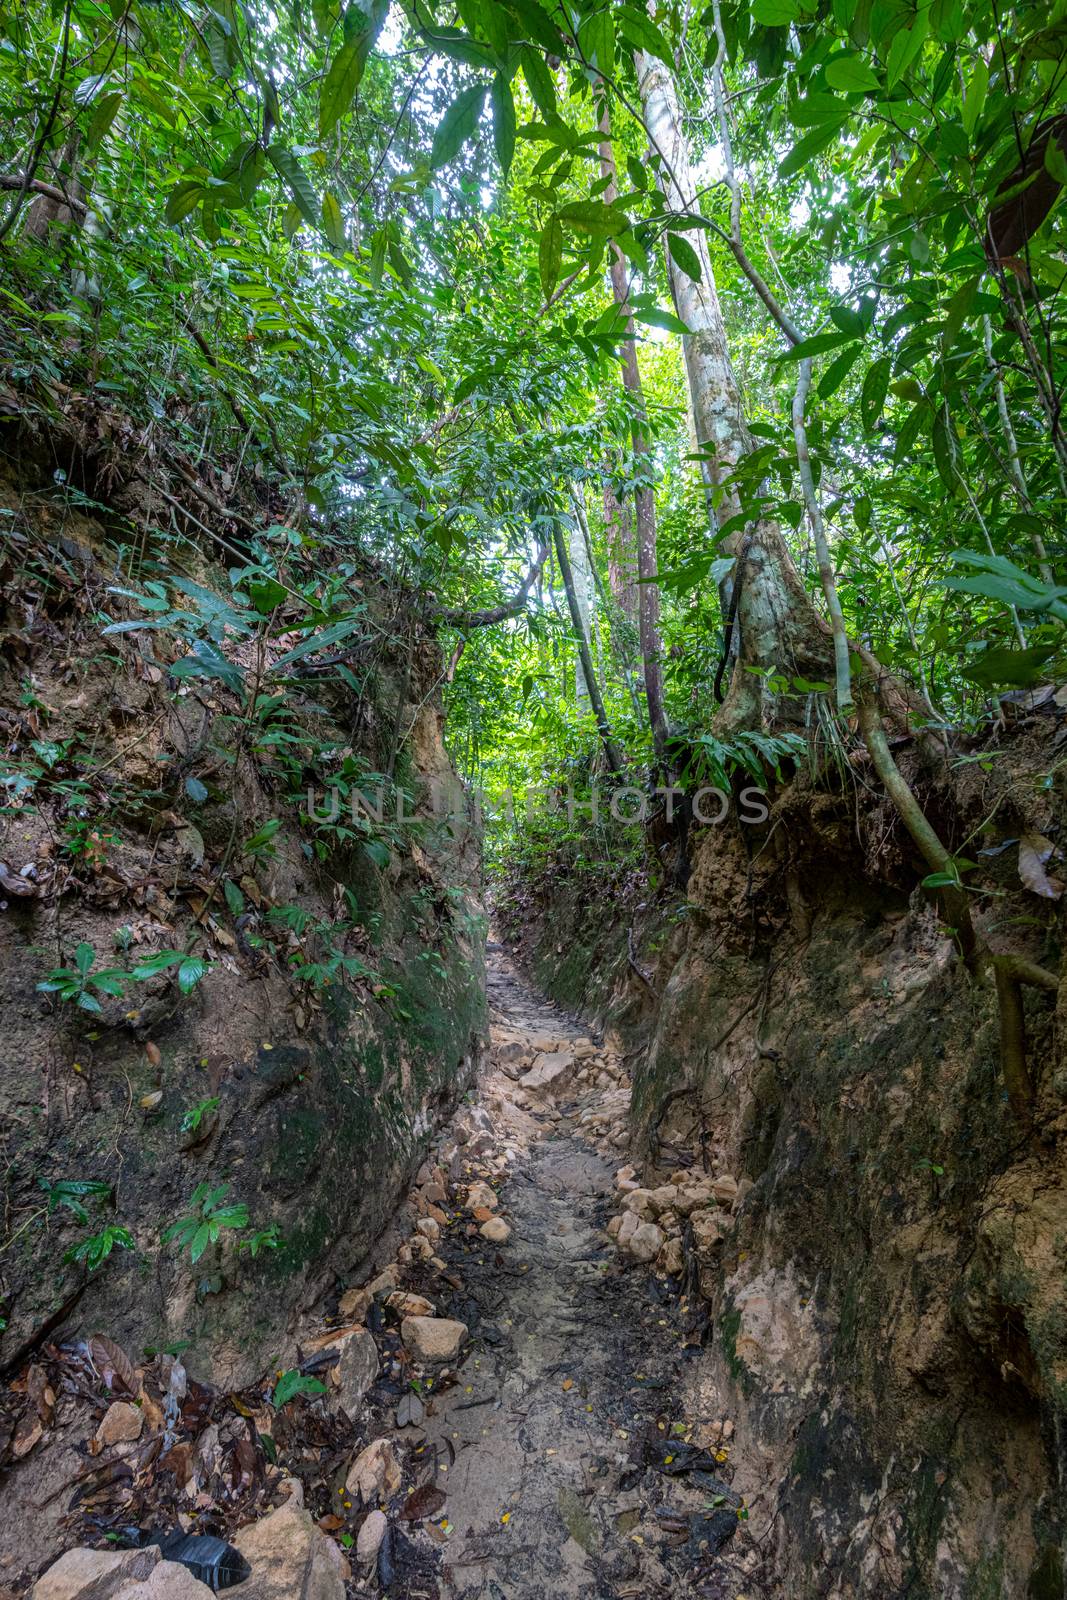 Penang island hiking path cutting through muddy tropical rain forest